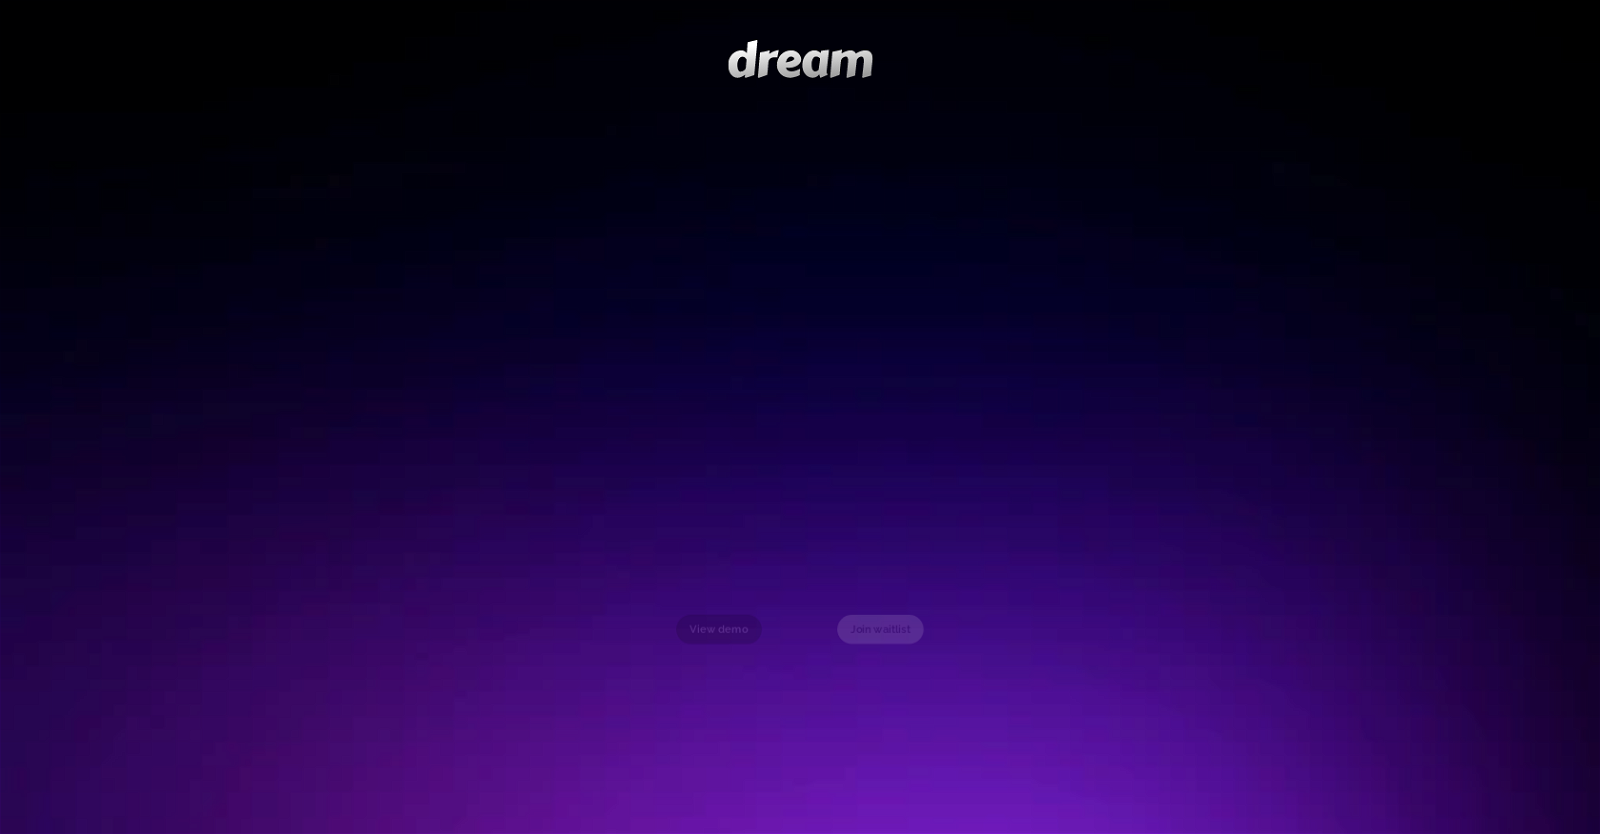 Dream website